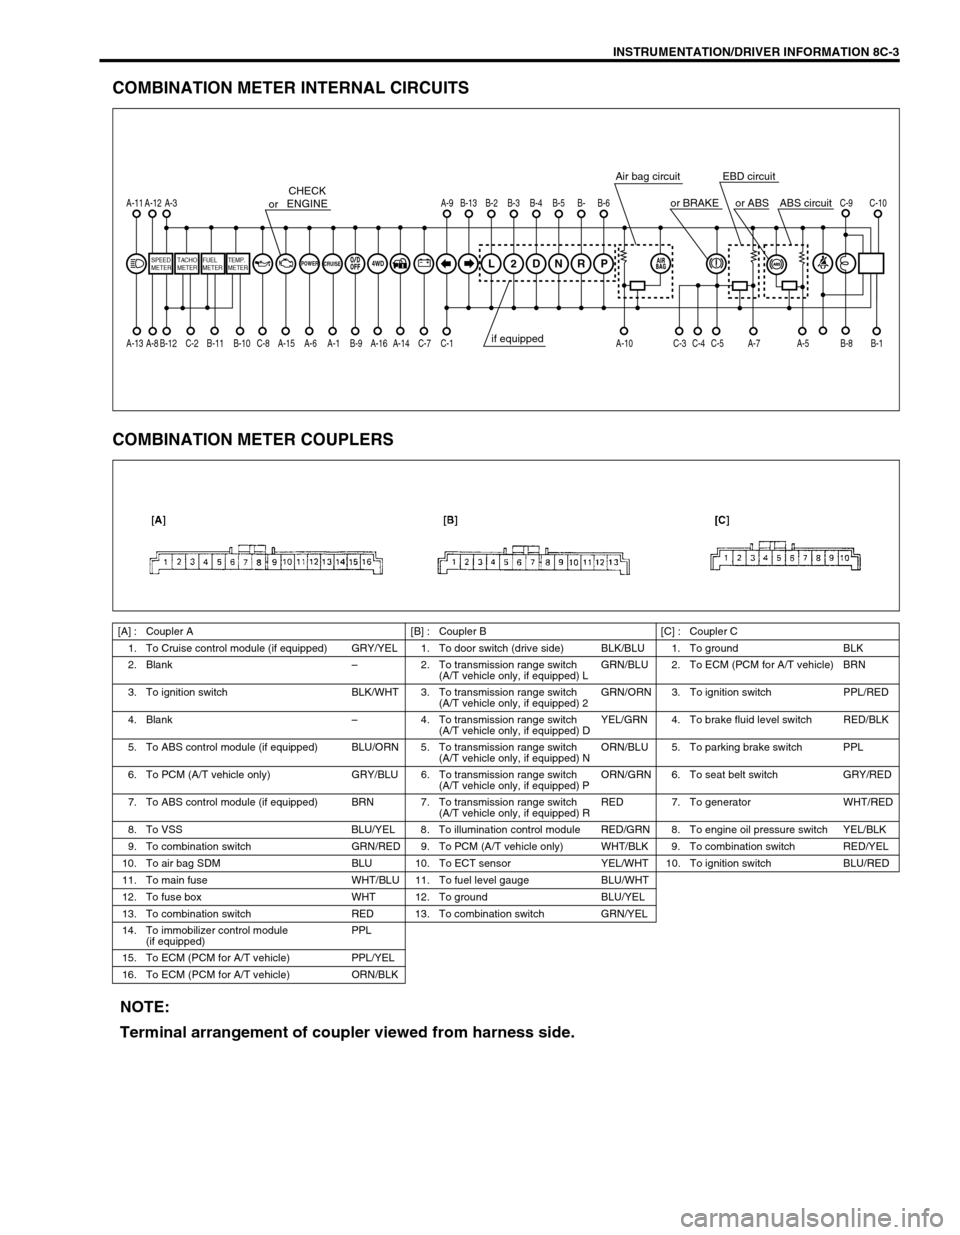 SUZUKI GRAND VITARA 1999 2.G Manual PDF INSTRUMENTATION/DRIVER INFORMATION 8C-3
COMBINATION METER INTERNAL CIRCUITS 
COMBINATION METER COUPLERS
[A] : Coupler A [B] : Coupler B [C] : Coupler C
1. To Cruise control module (if equipped) GRY/YE